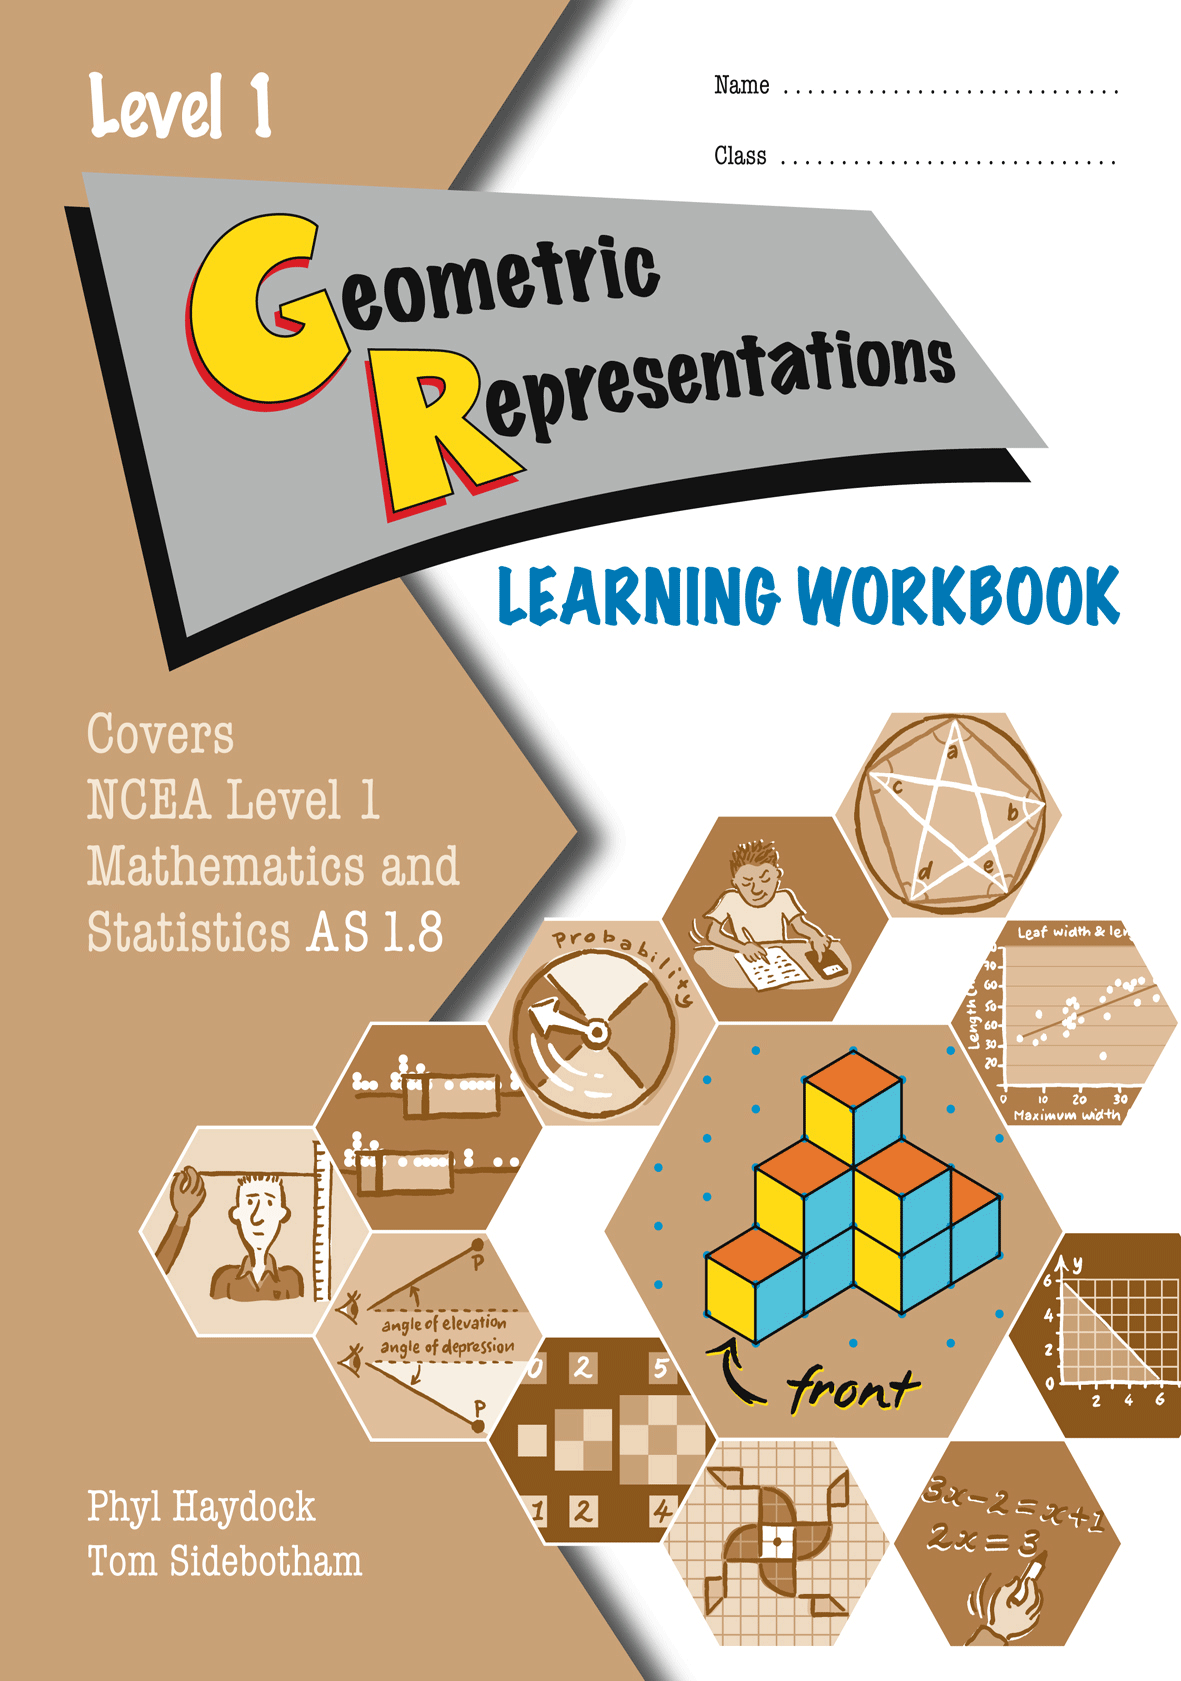 Level 1 Geometric Representations 1.8 Learning Workbook